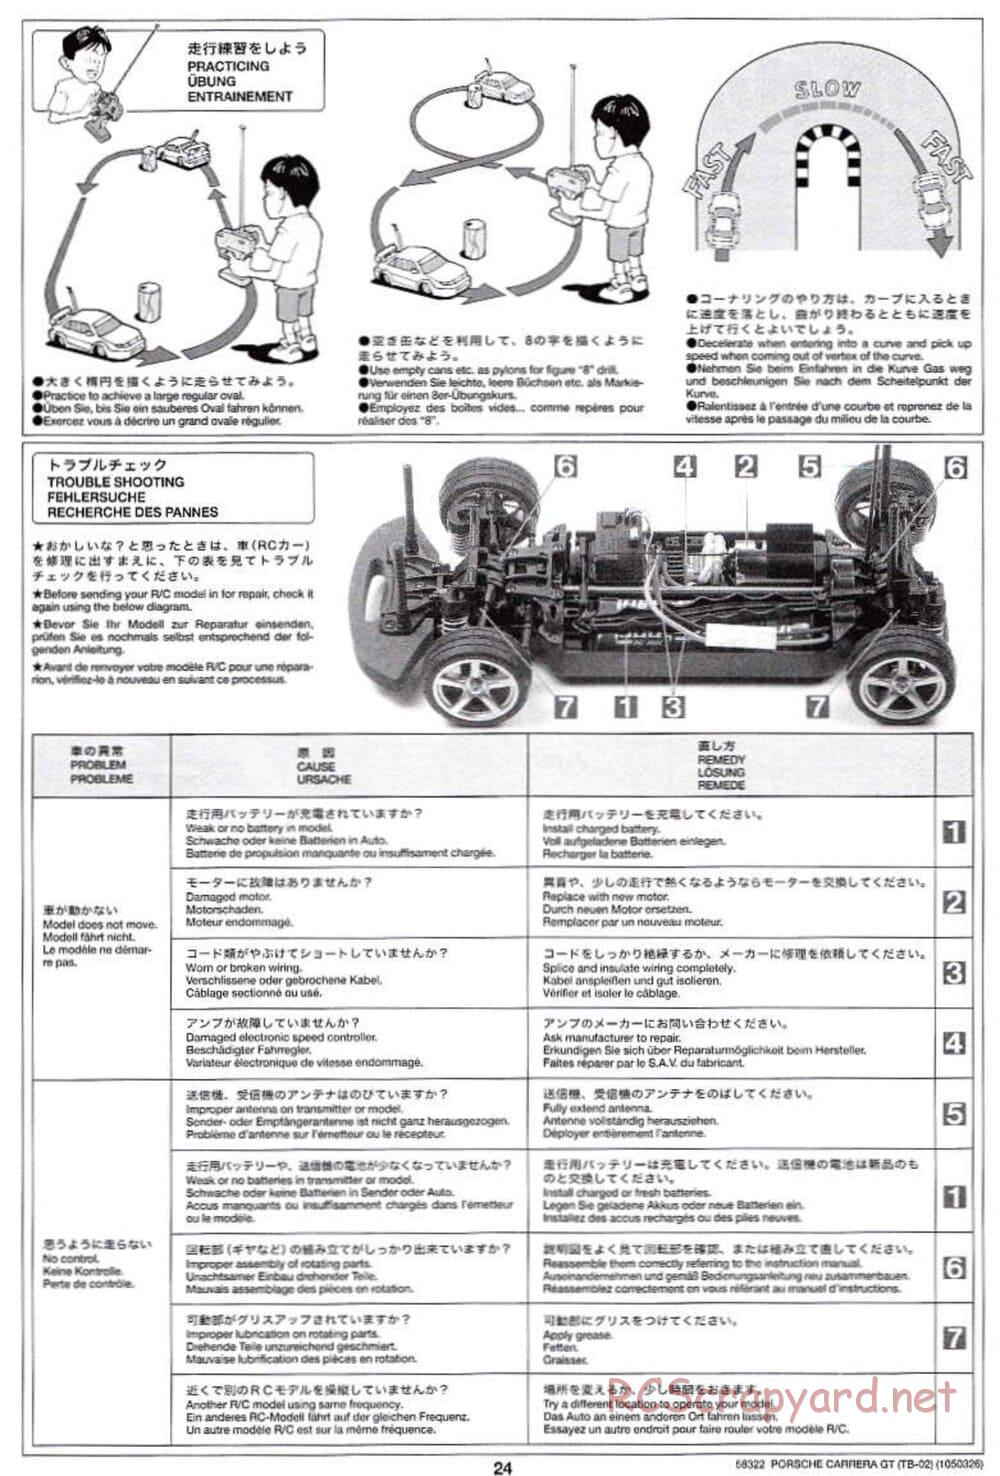 Tamiya - Porsche Carrera GT - TB-02 Chassis - Manual - Page 24